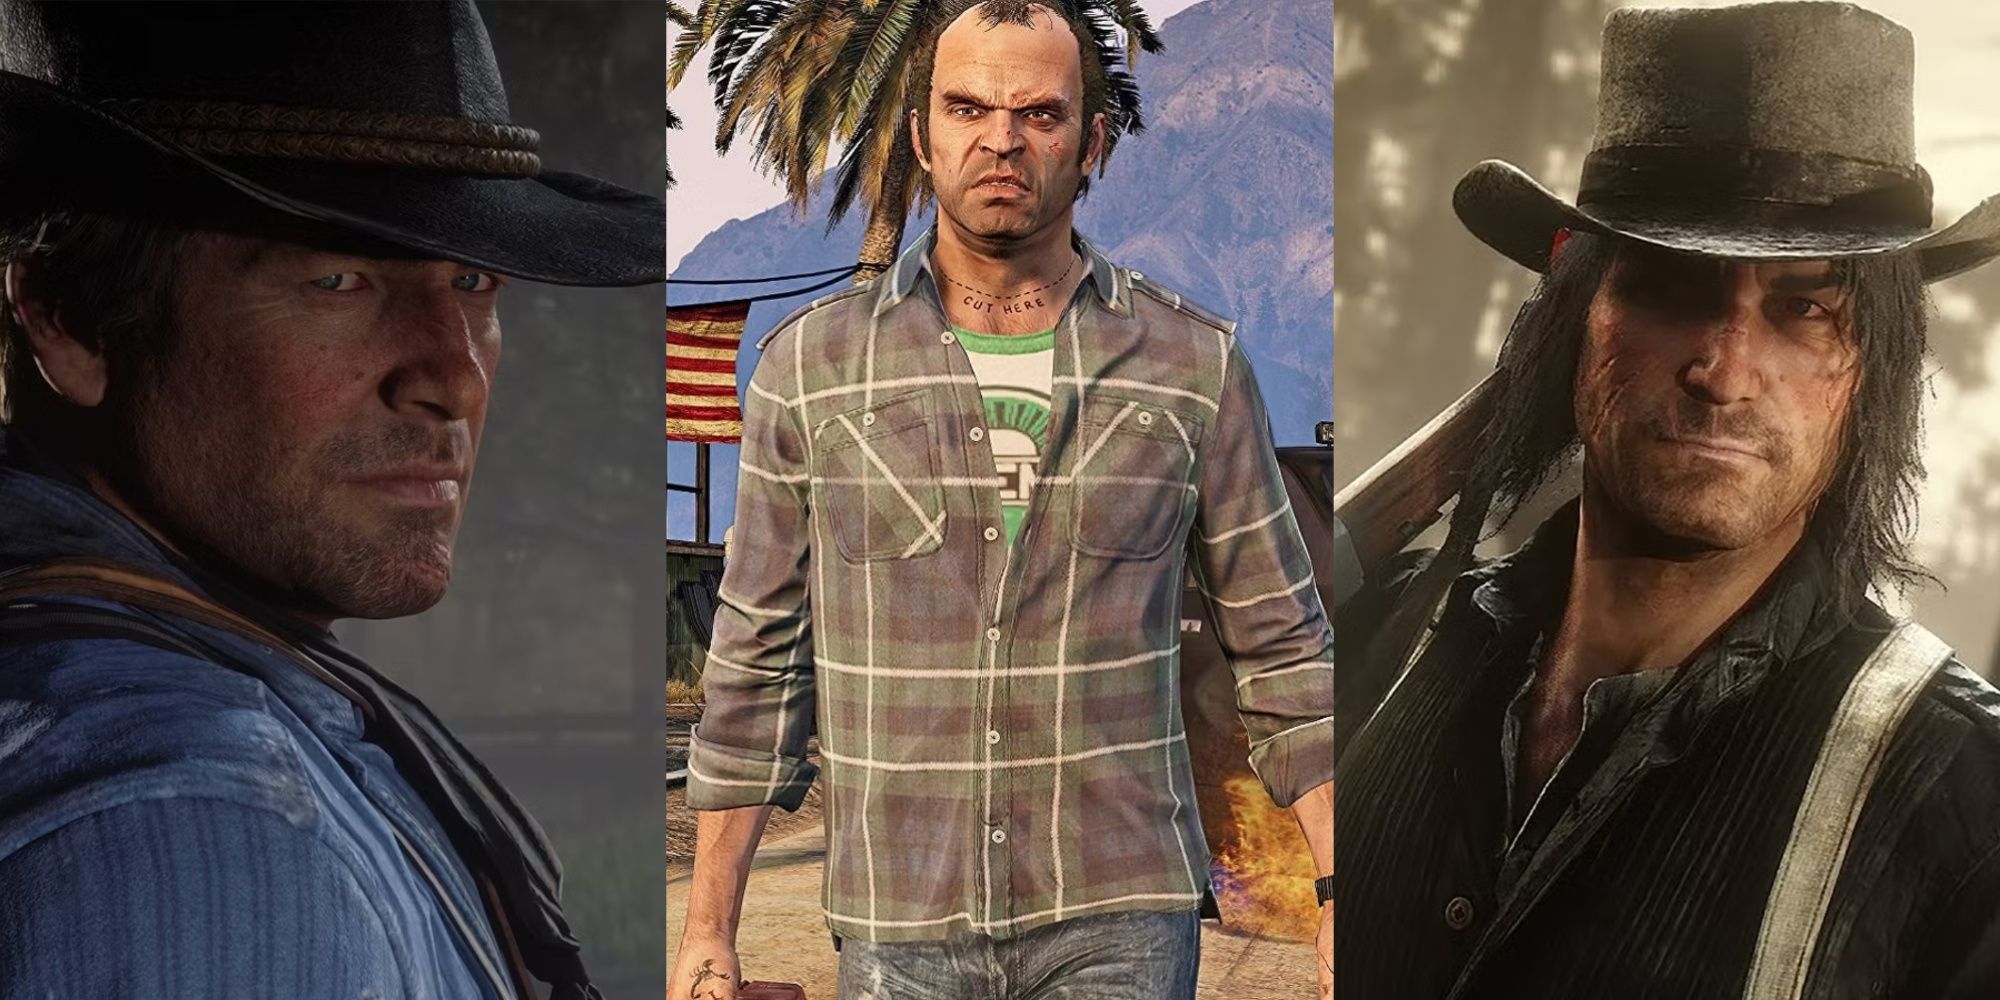 Rockstar Character deaths feature